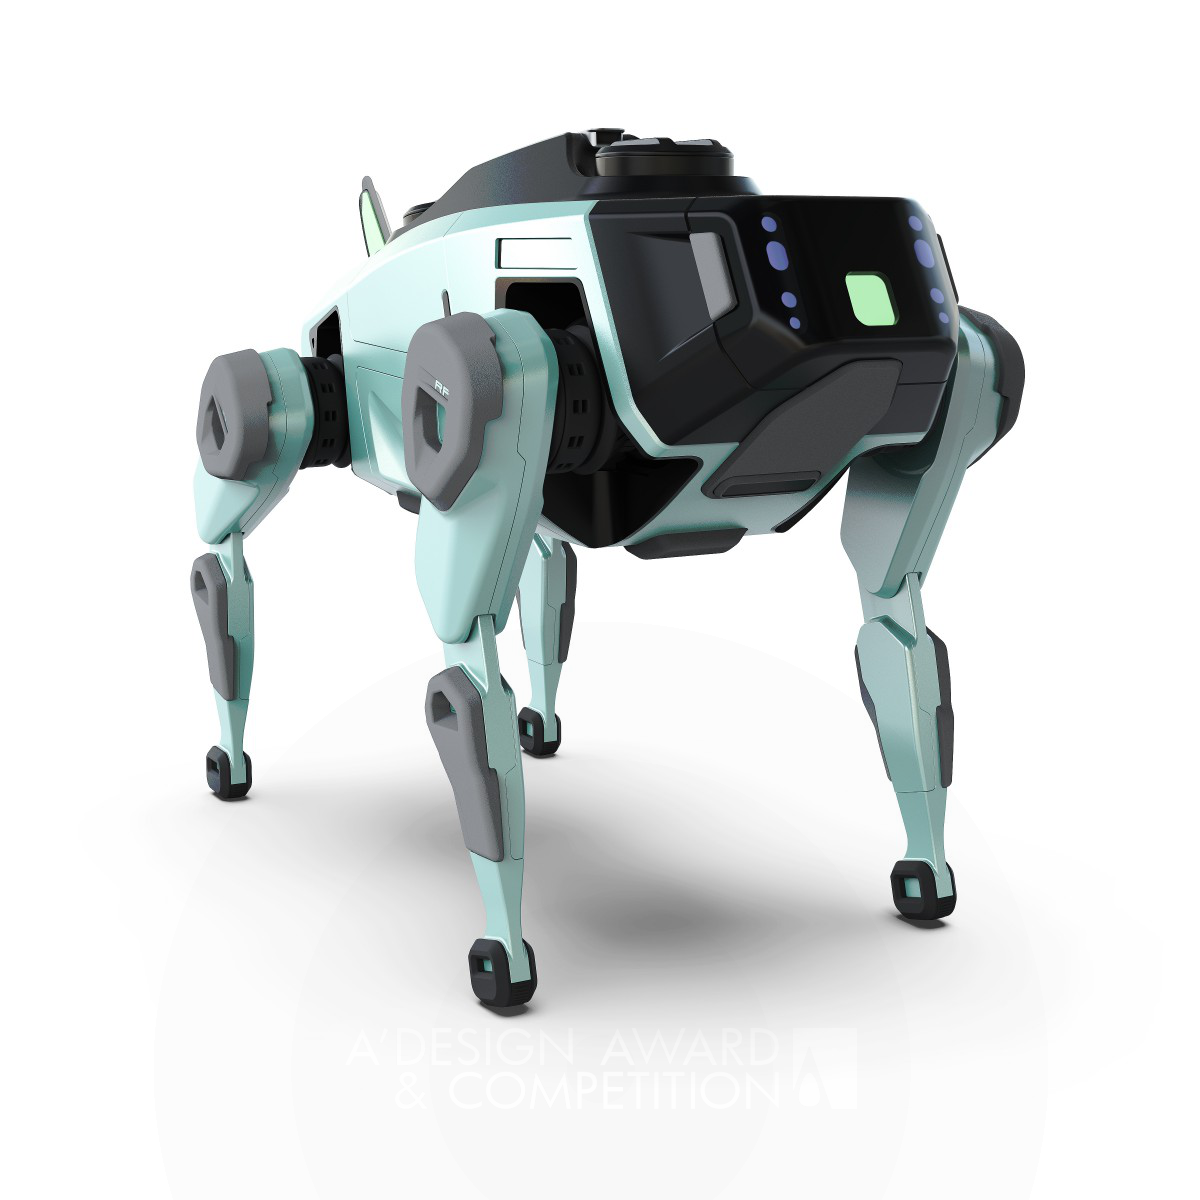 Ufuk Ogul Dülgeroglu wins Golden at the prestigious A' Robotics, Automaton and Automation Design Award with Robuddy Autonomous Guide Dog.